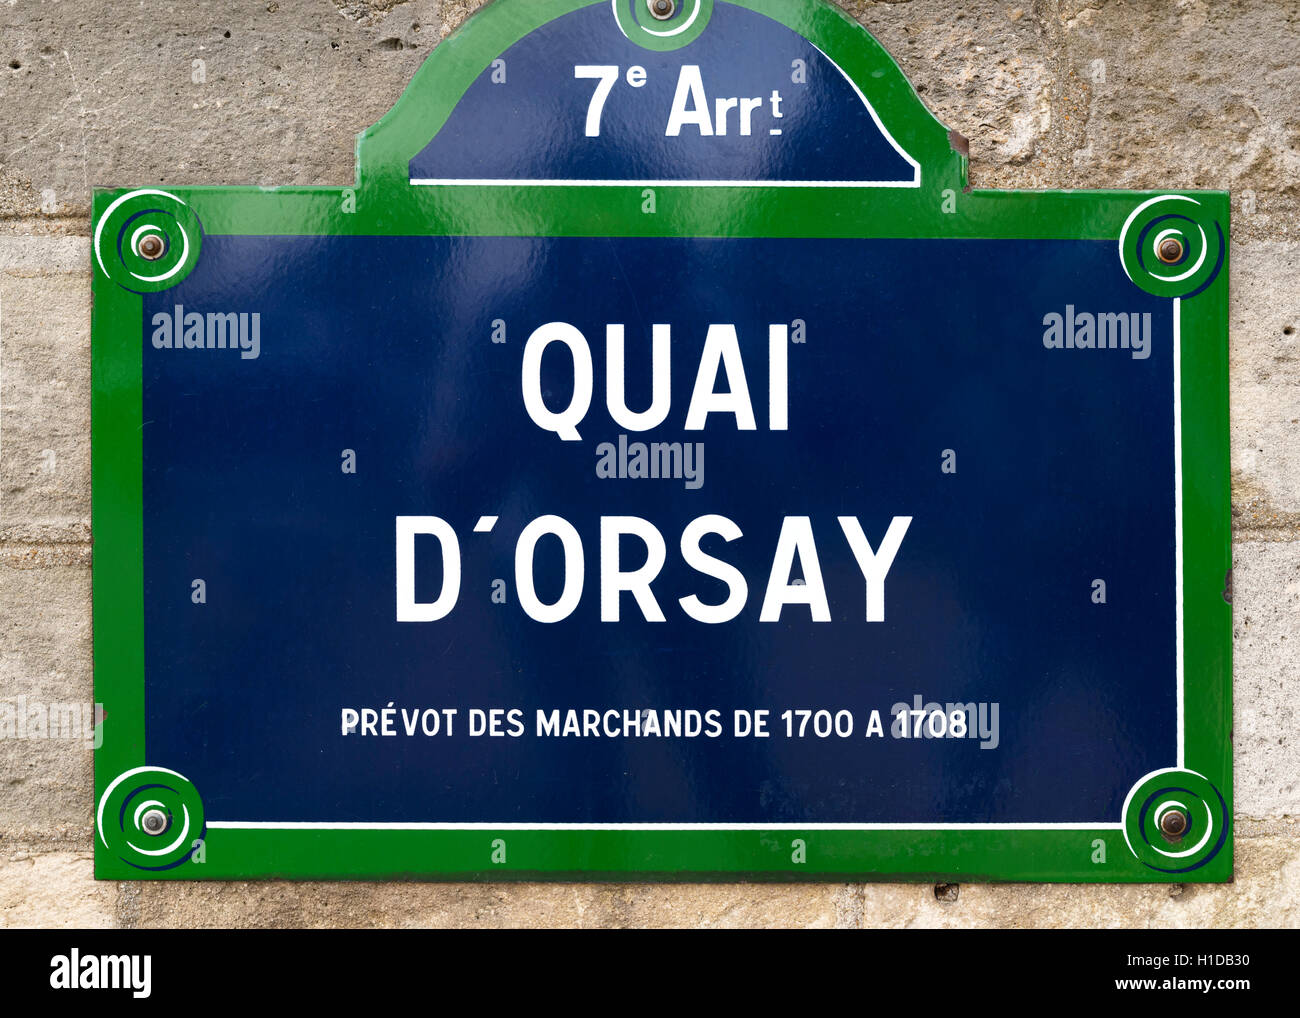 Quai d'Orsay street sign, Paris, France Stock Photo